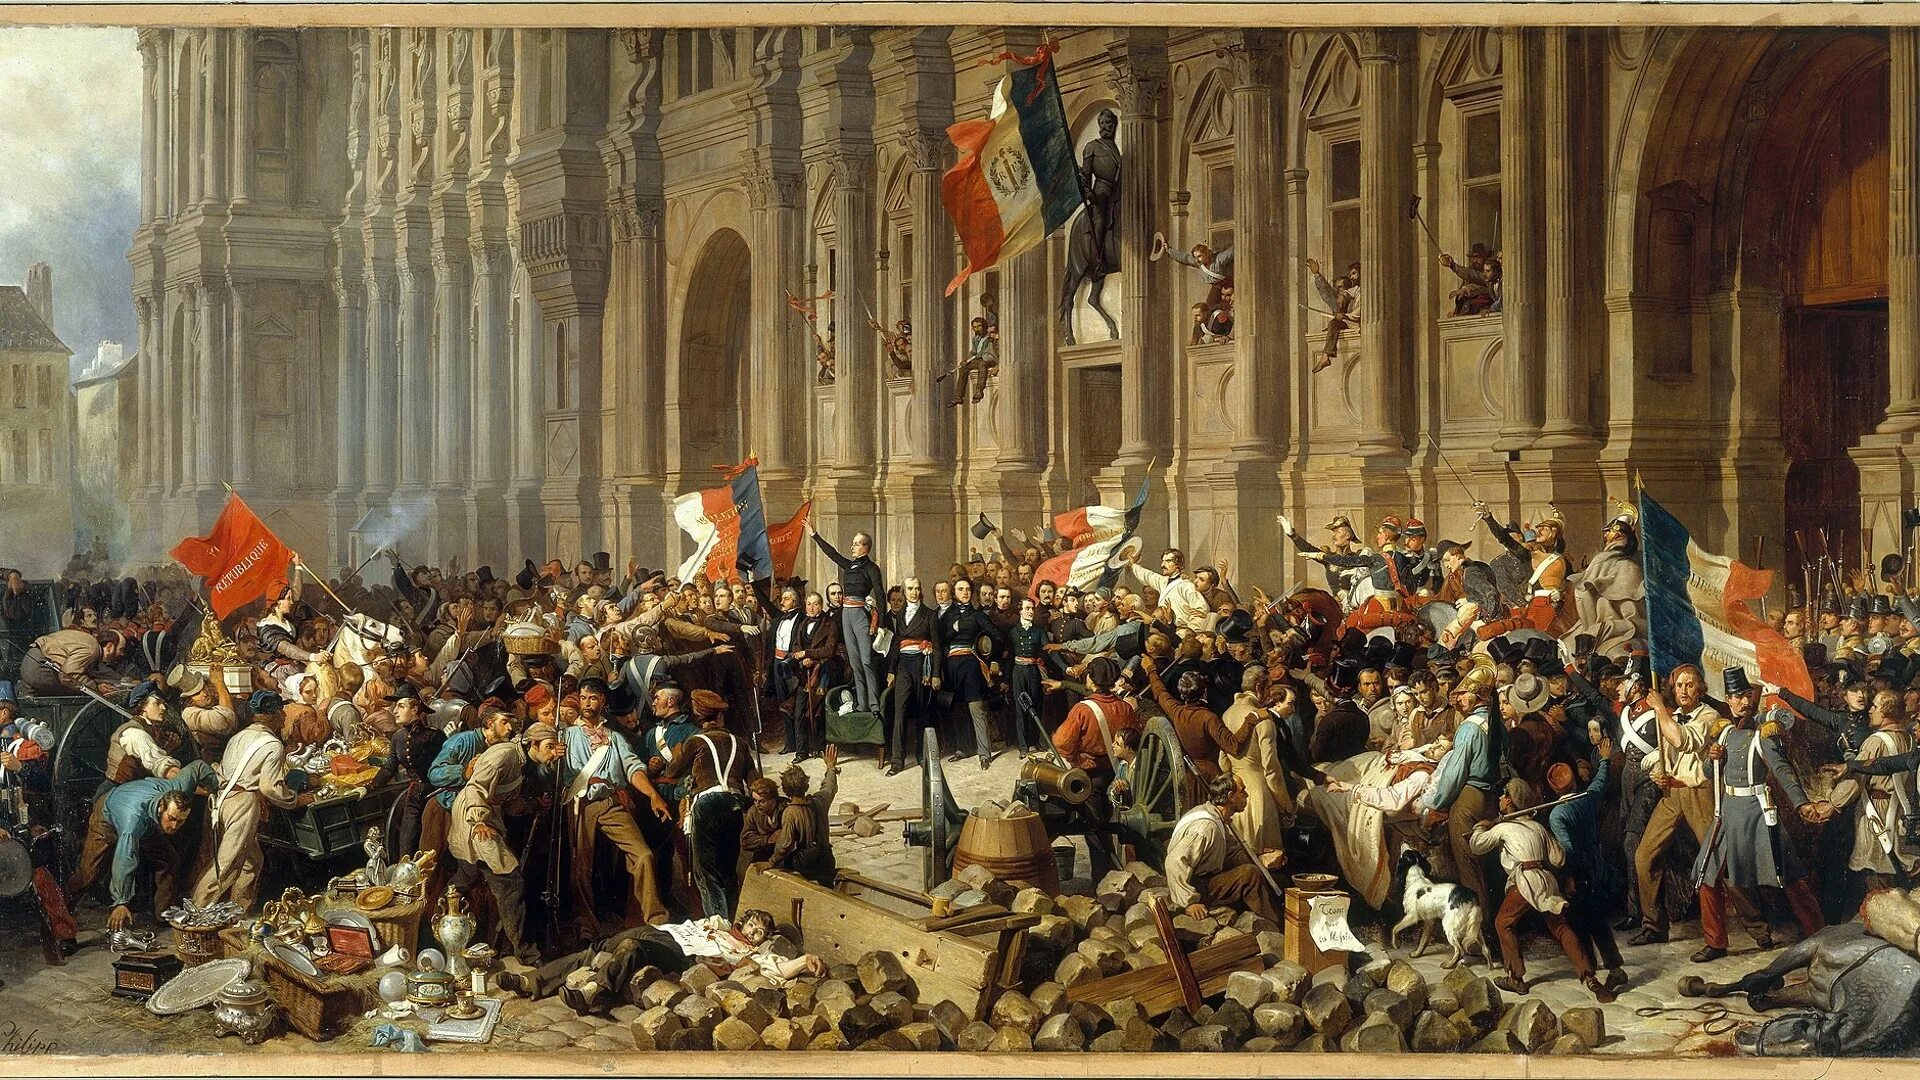 Франция пала. Великая французская революция 1848-1849. Великая французская революция 1789-1792. Французская революция 1789 Наполеон Бонапарт.